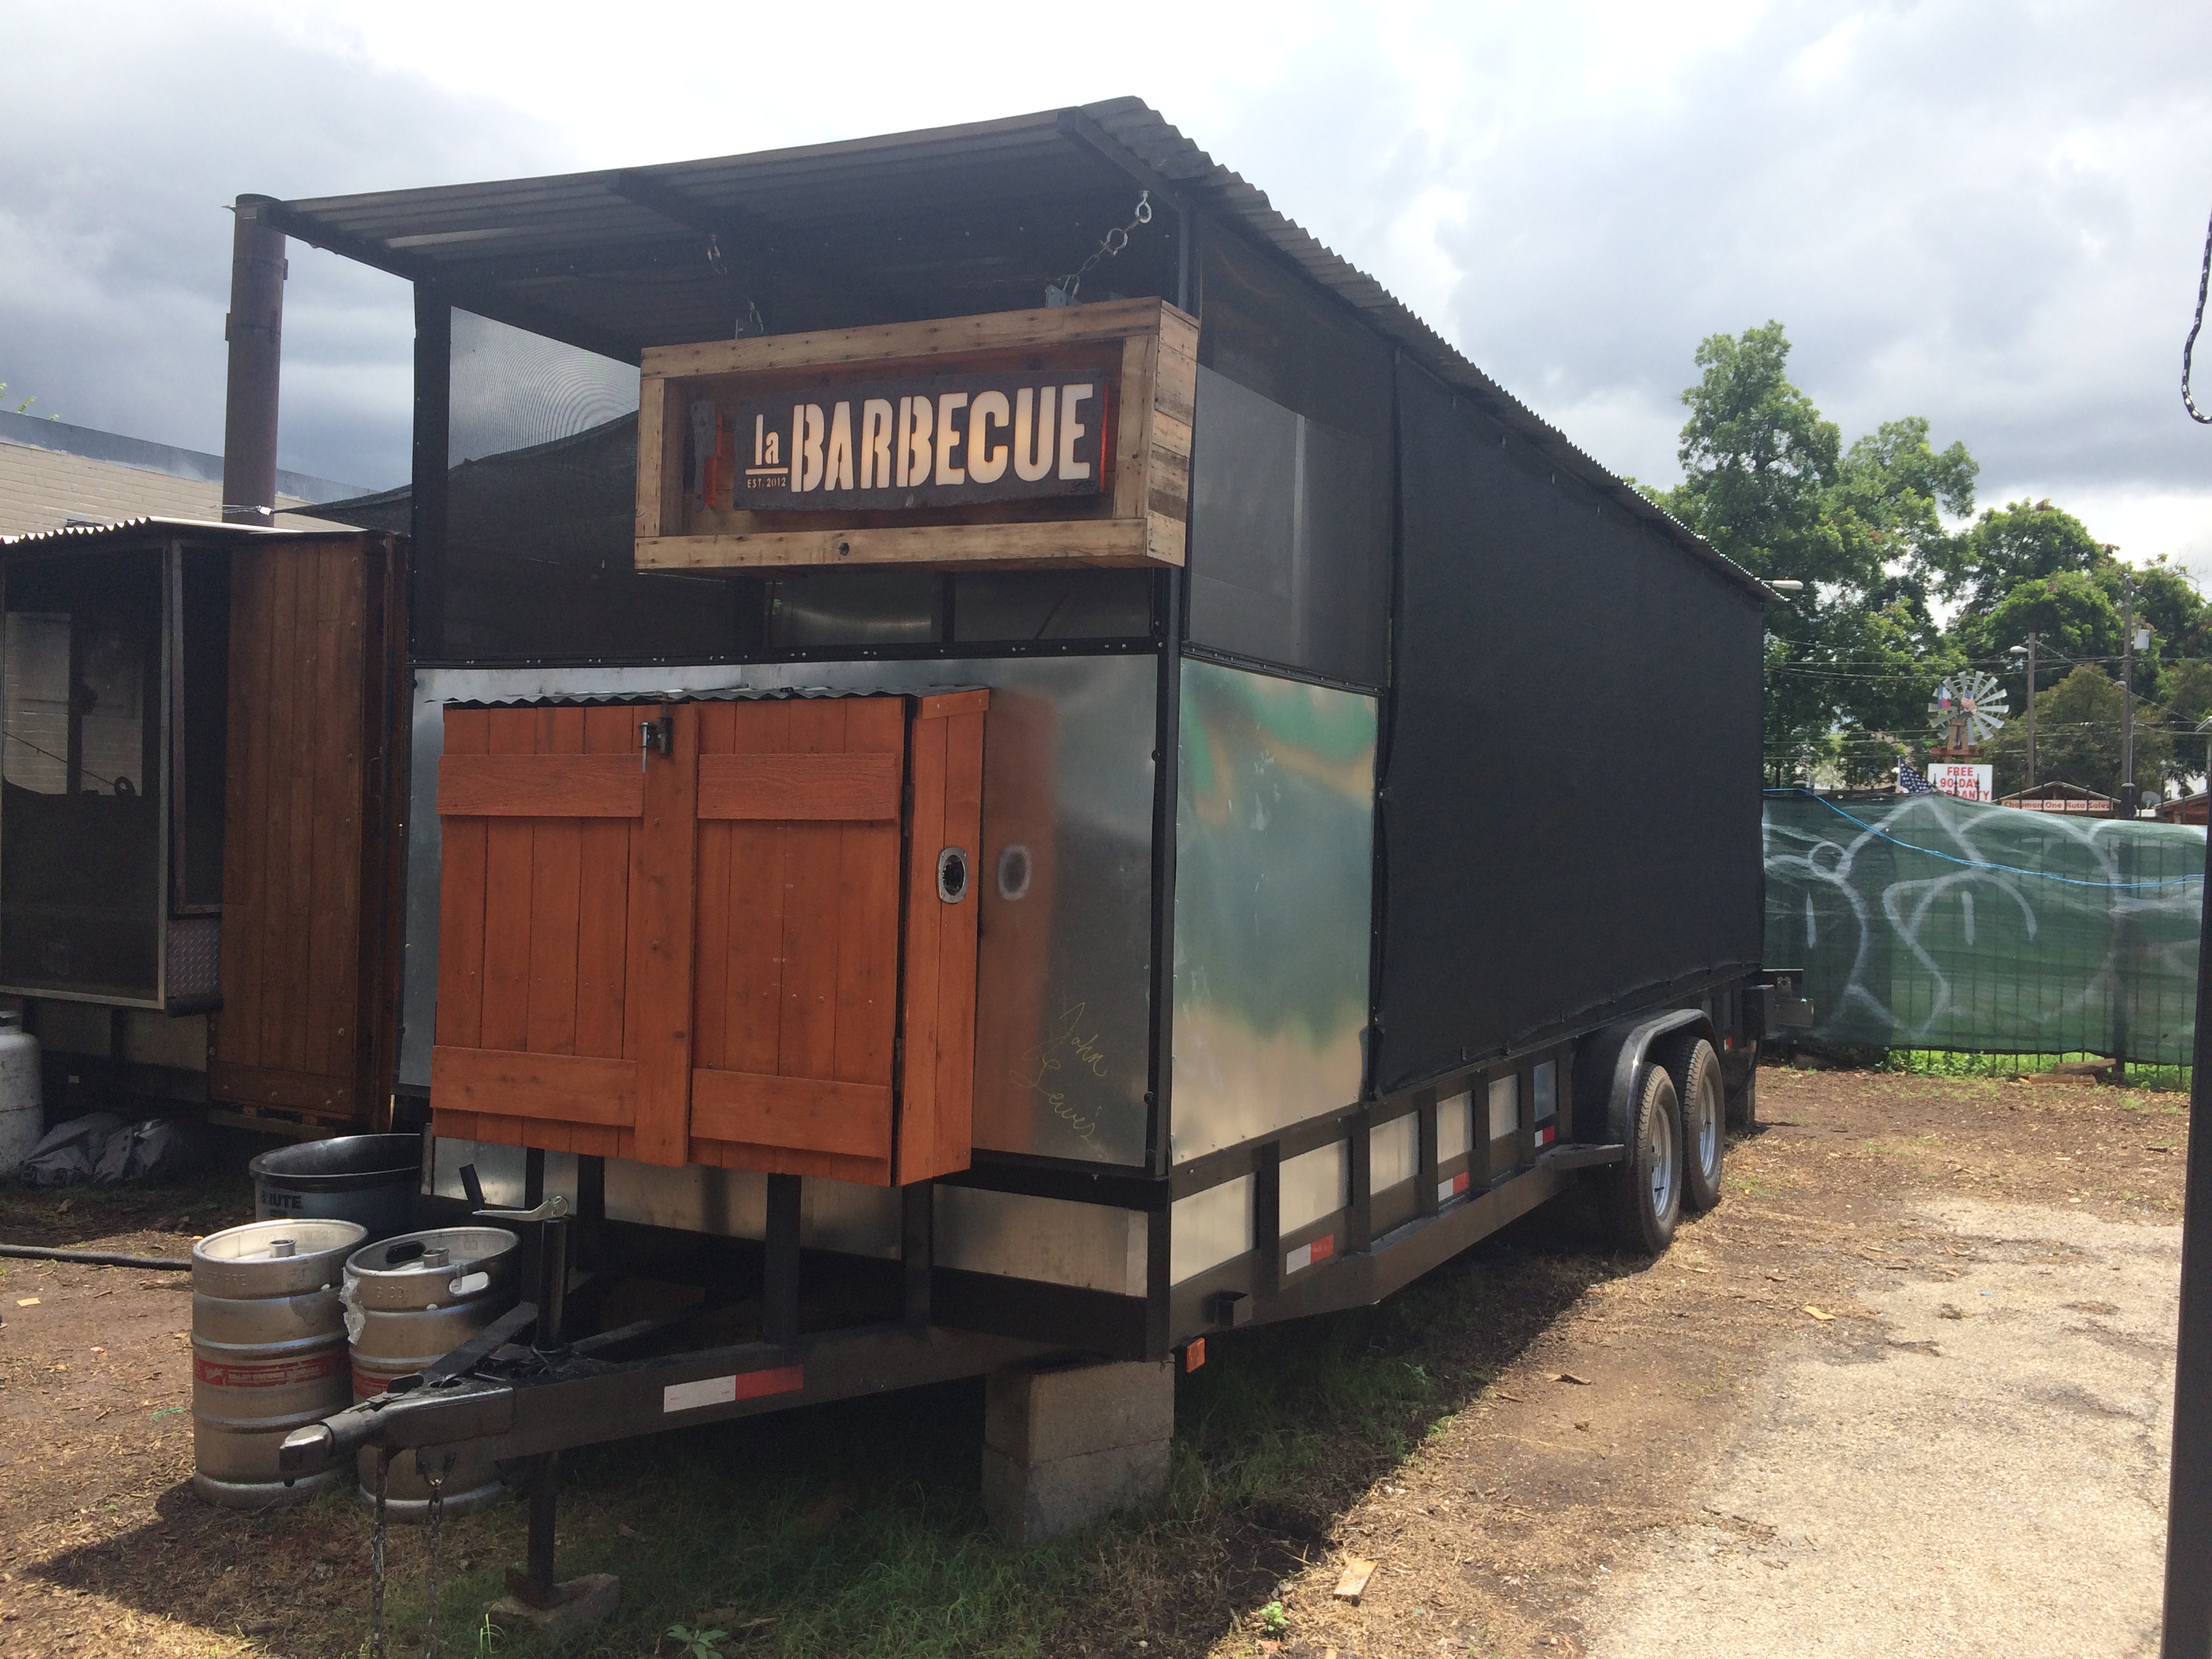 La Barbecue's trailer at Good Life Park